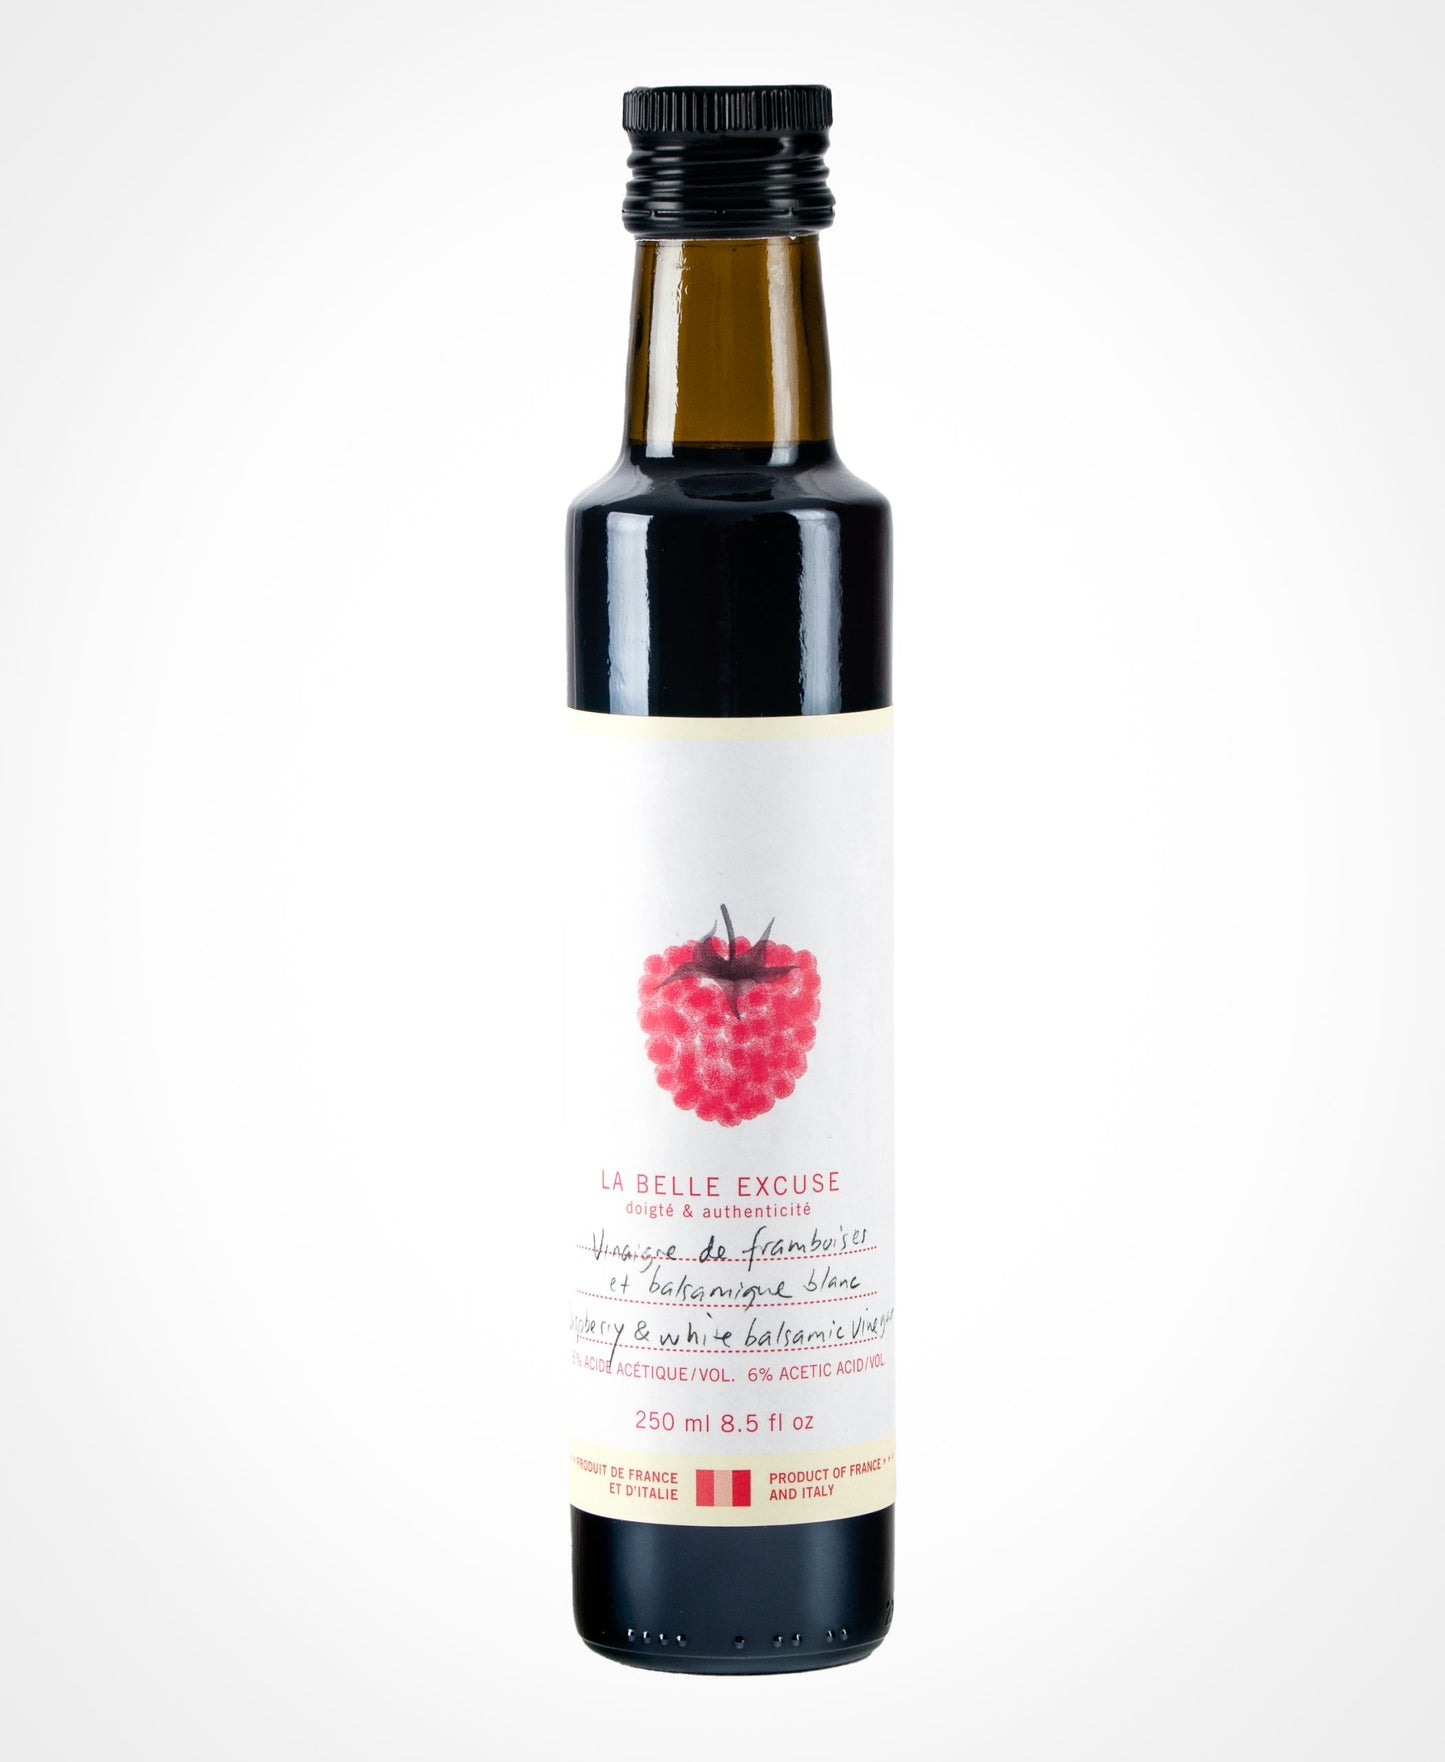 Raspberry and white balsamic vinegar